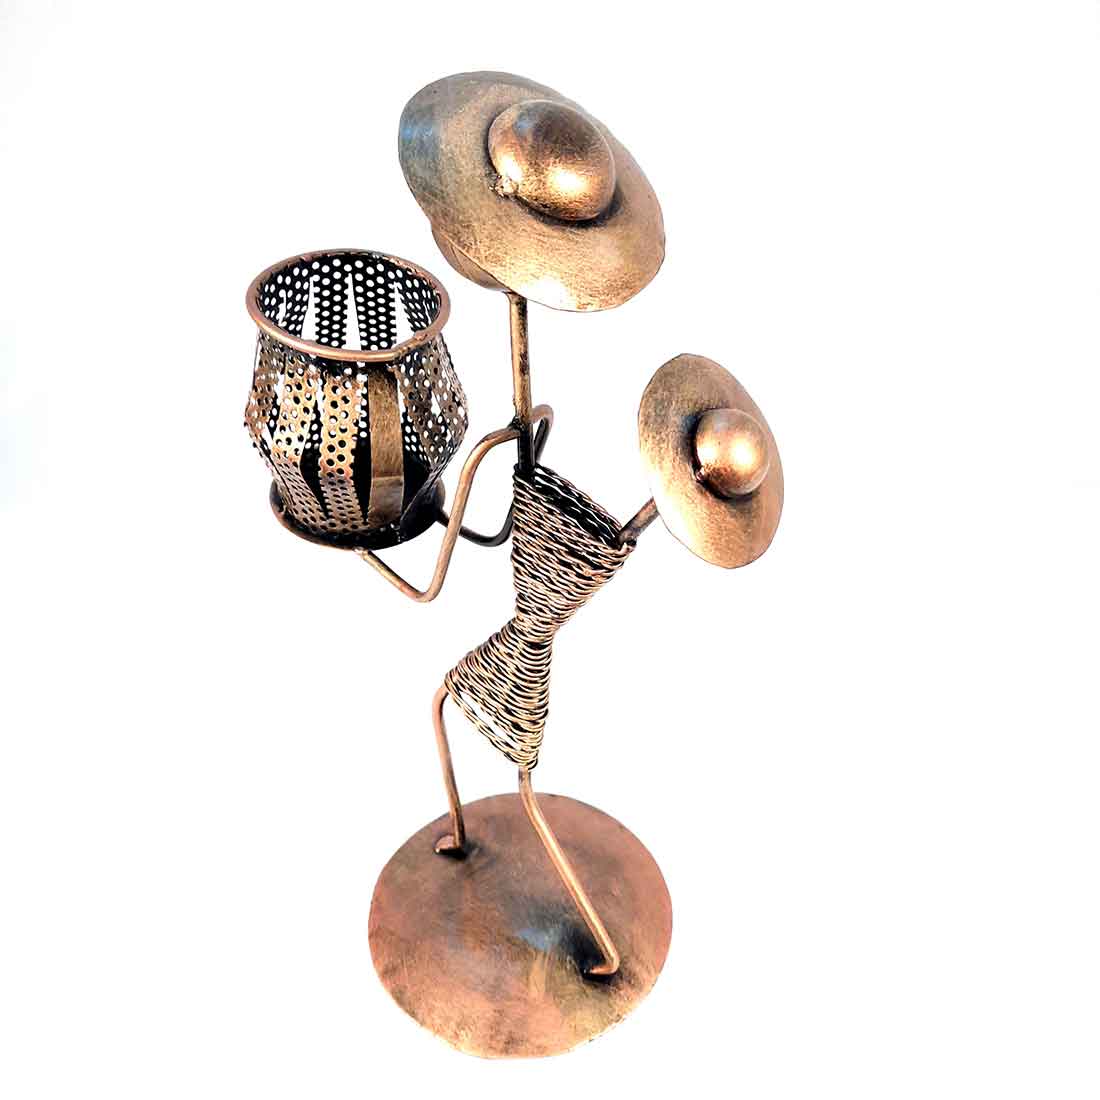 Candle Stand | Decorative Tealight Candle Holders - Men Design -16 Inch - ApkaMart